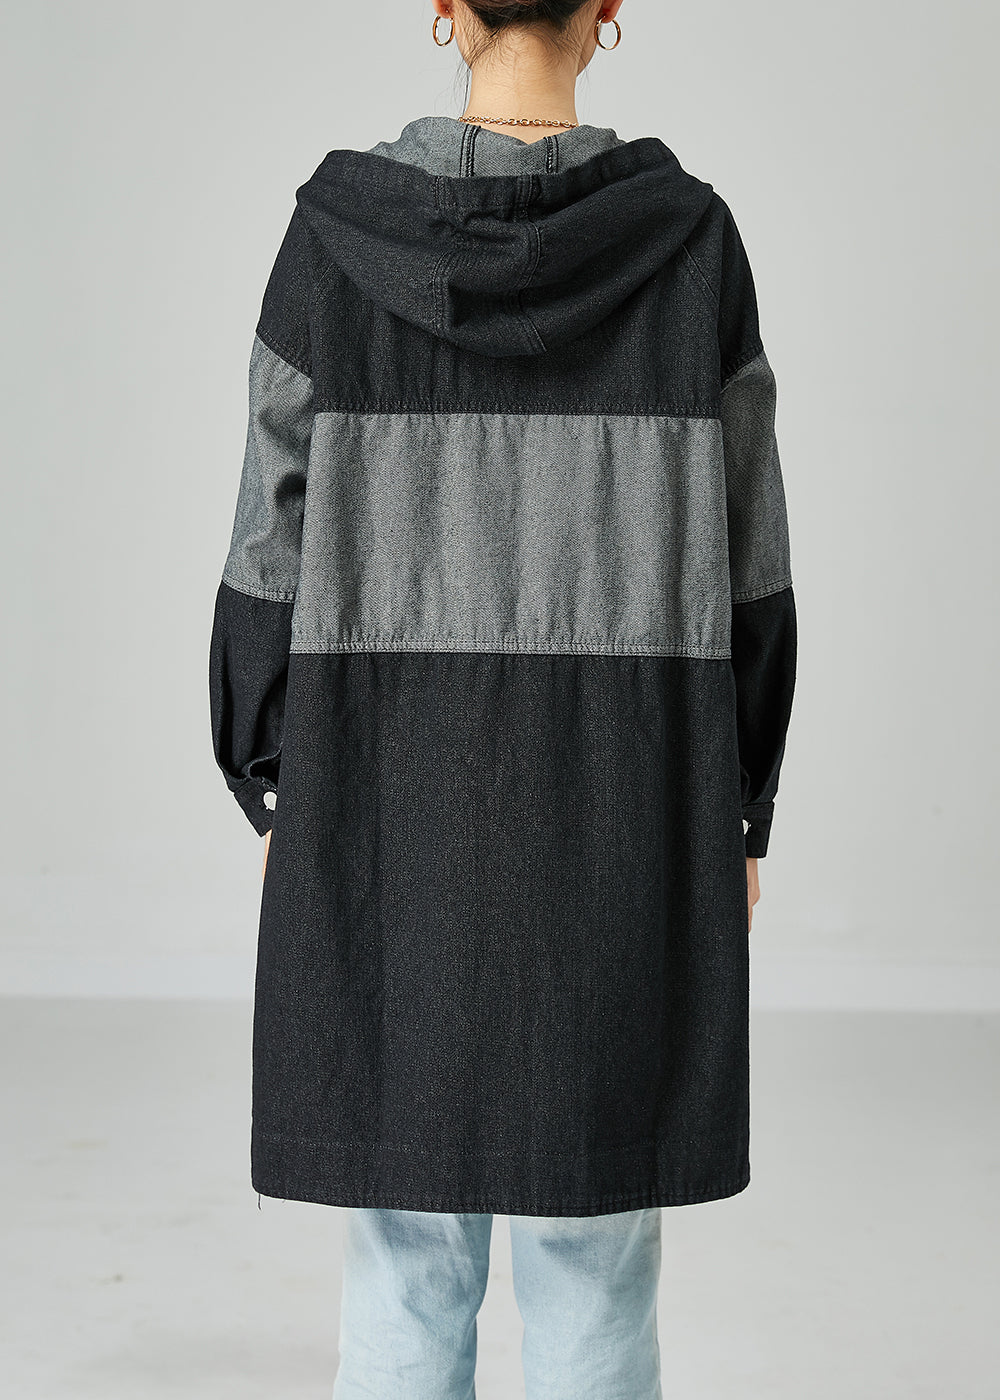 Black Patchwork Cotton Denim Trench Coat Hooded Oversized Spring LY2457 - fabuloryshop